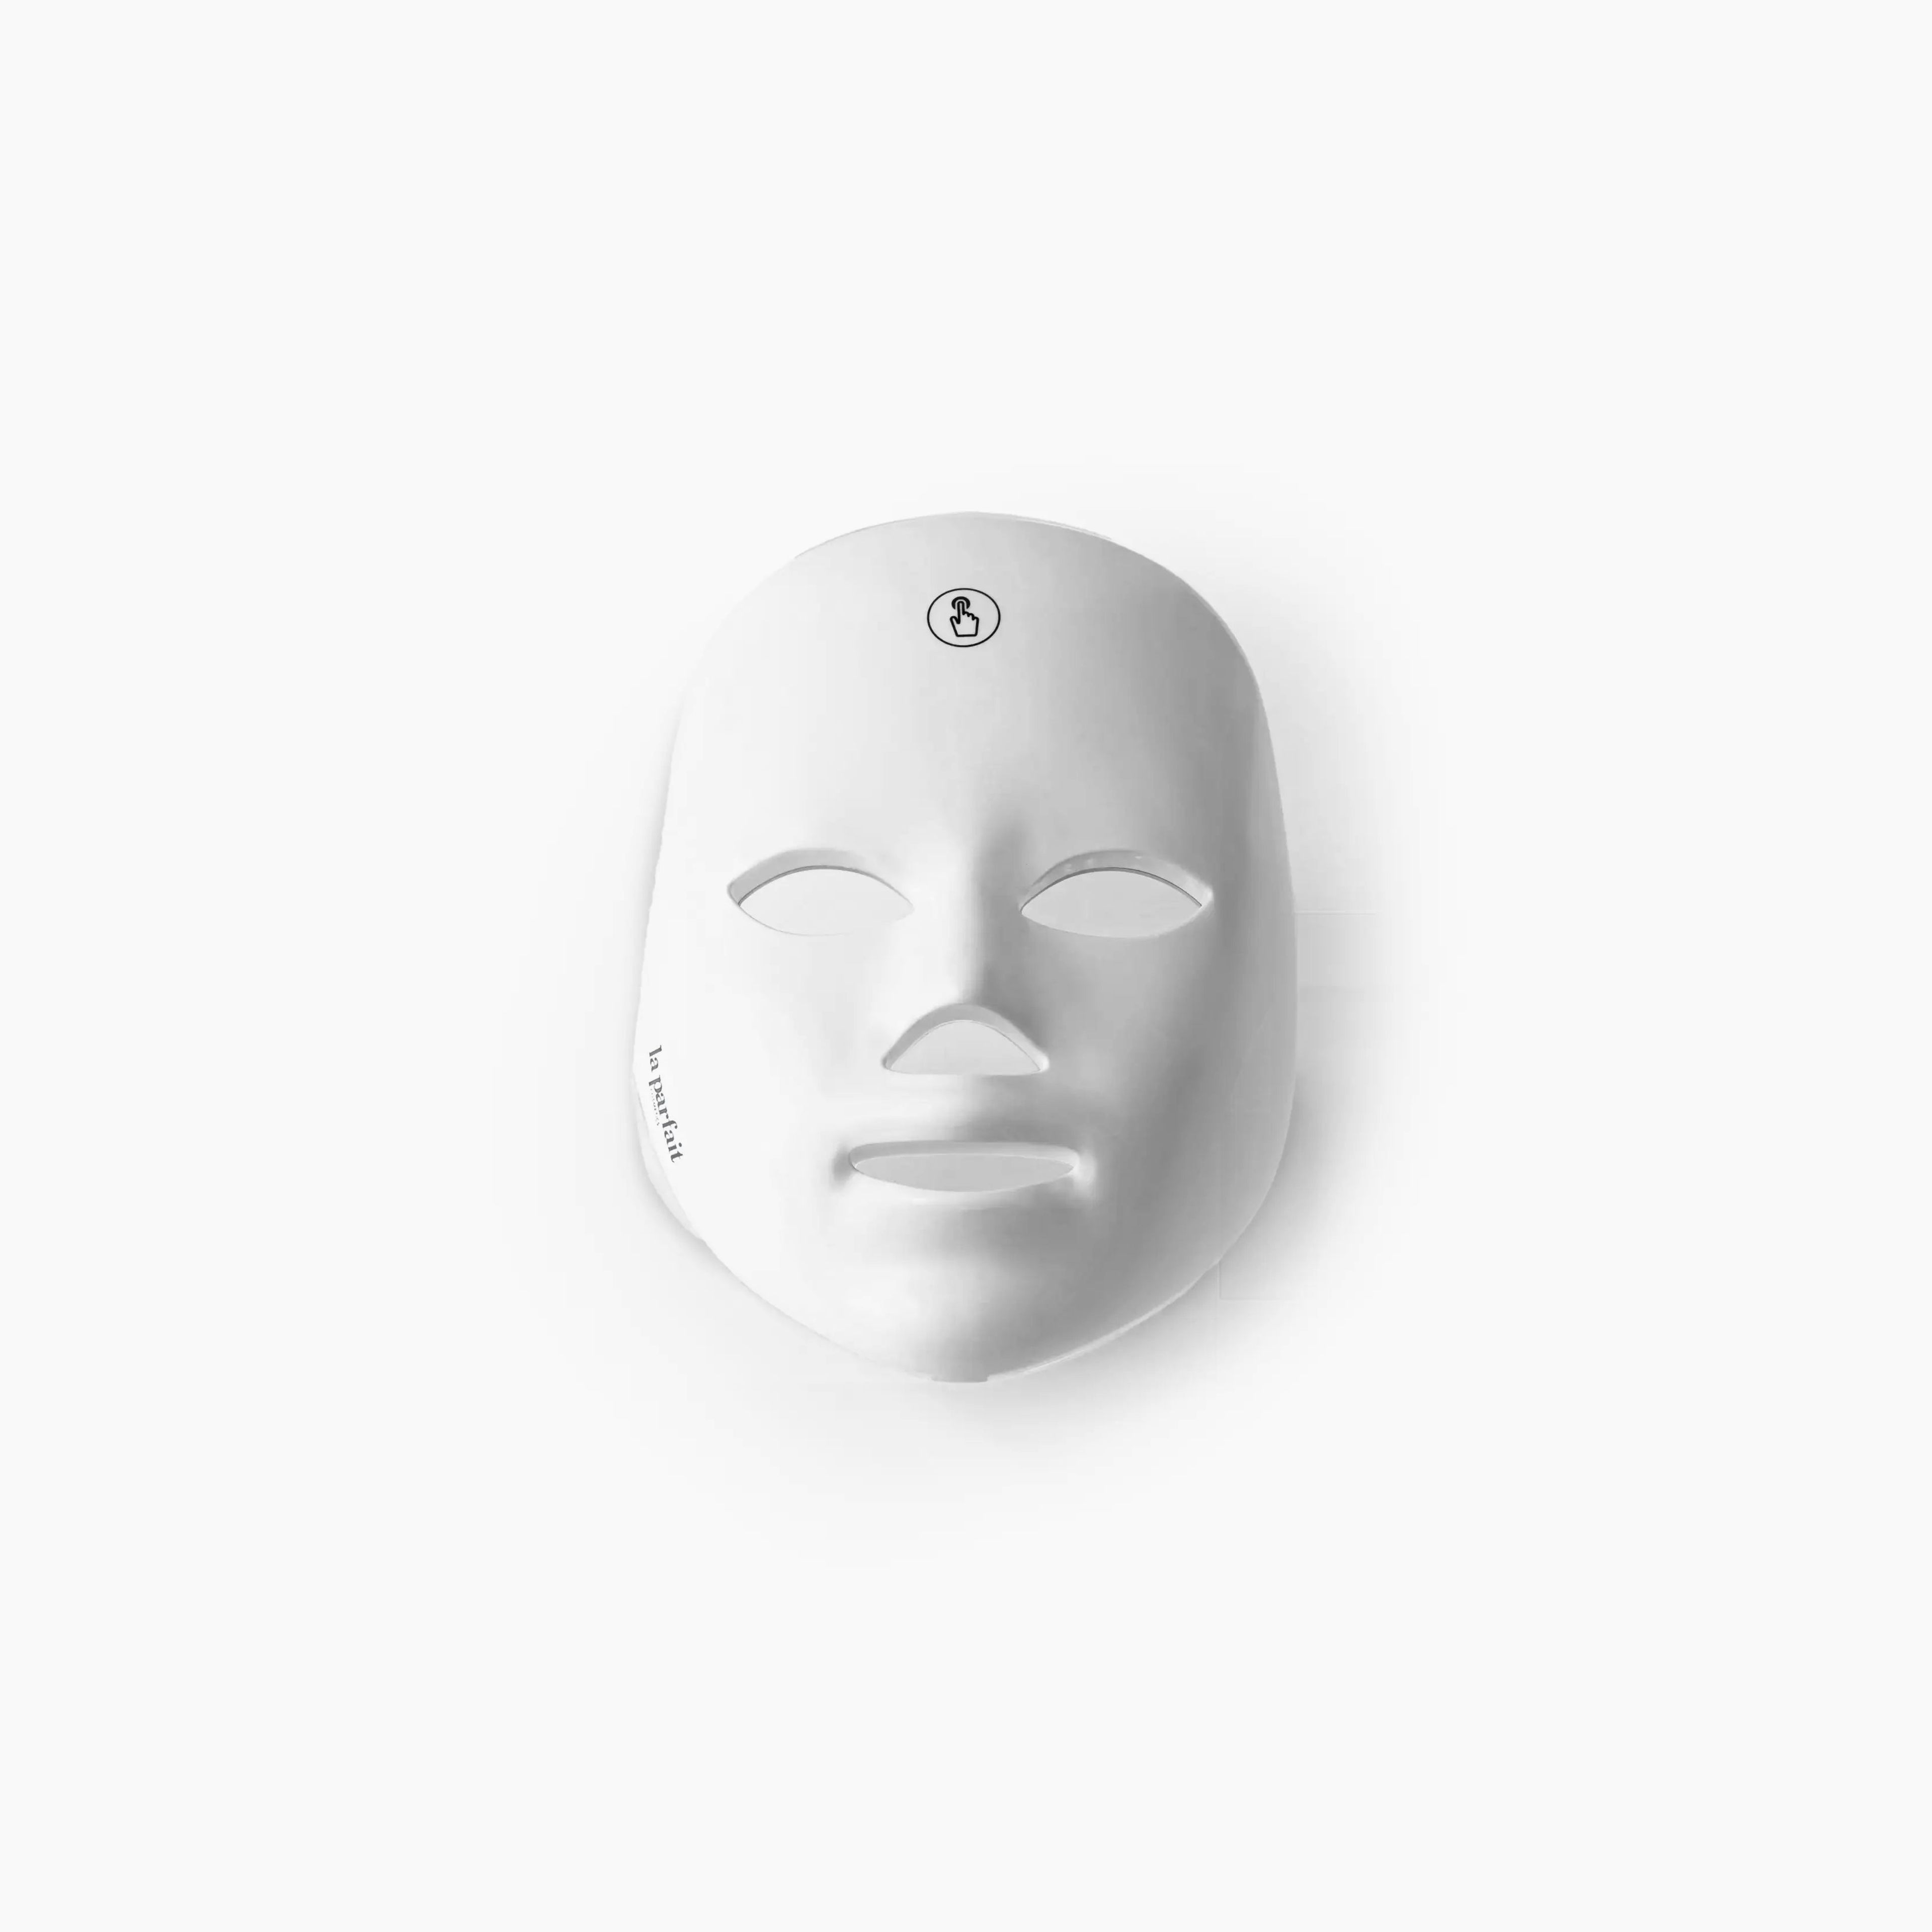 LED Beauty Mask - Wierless